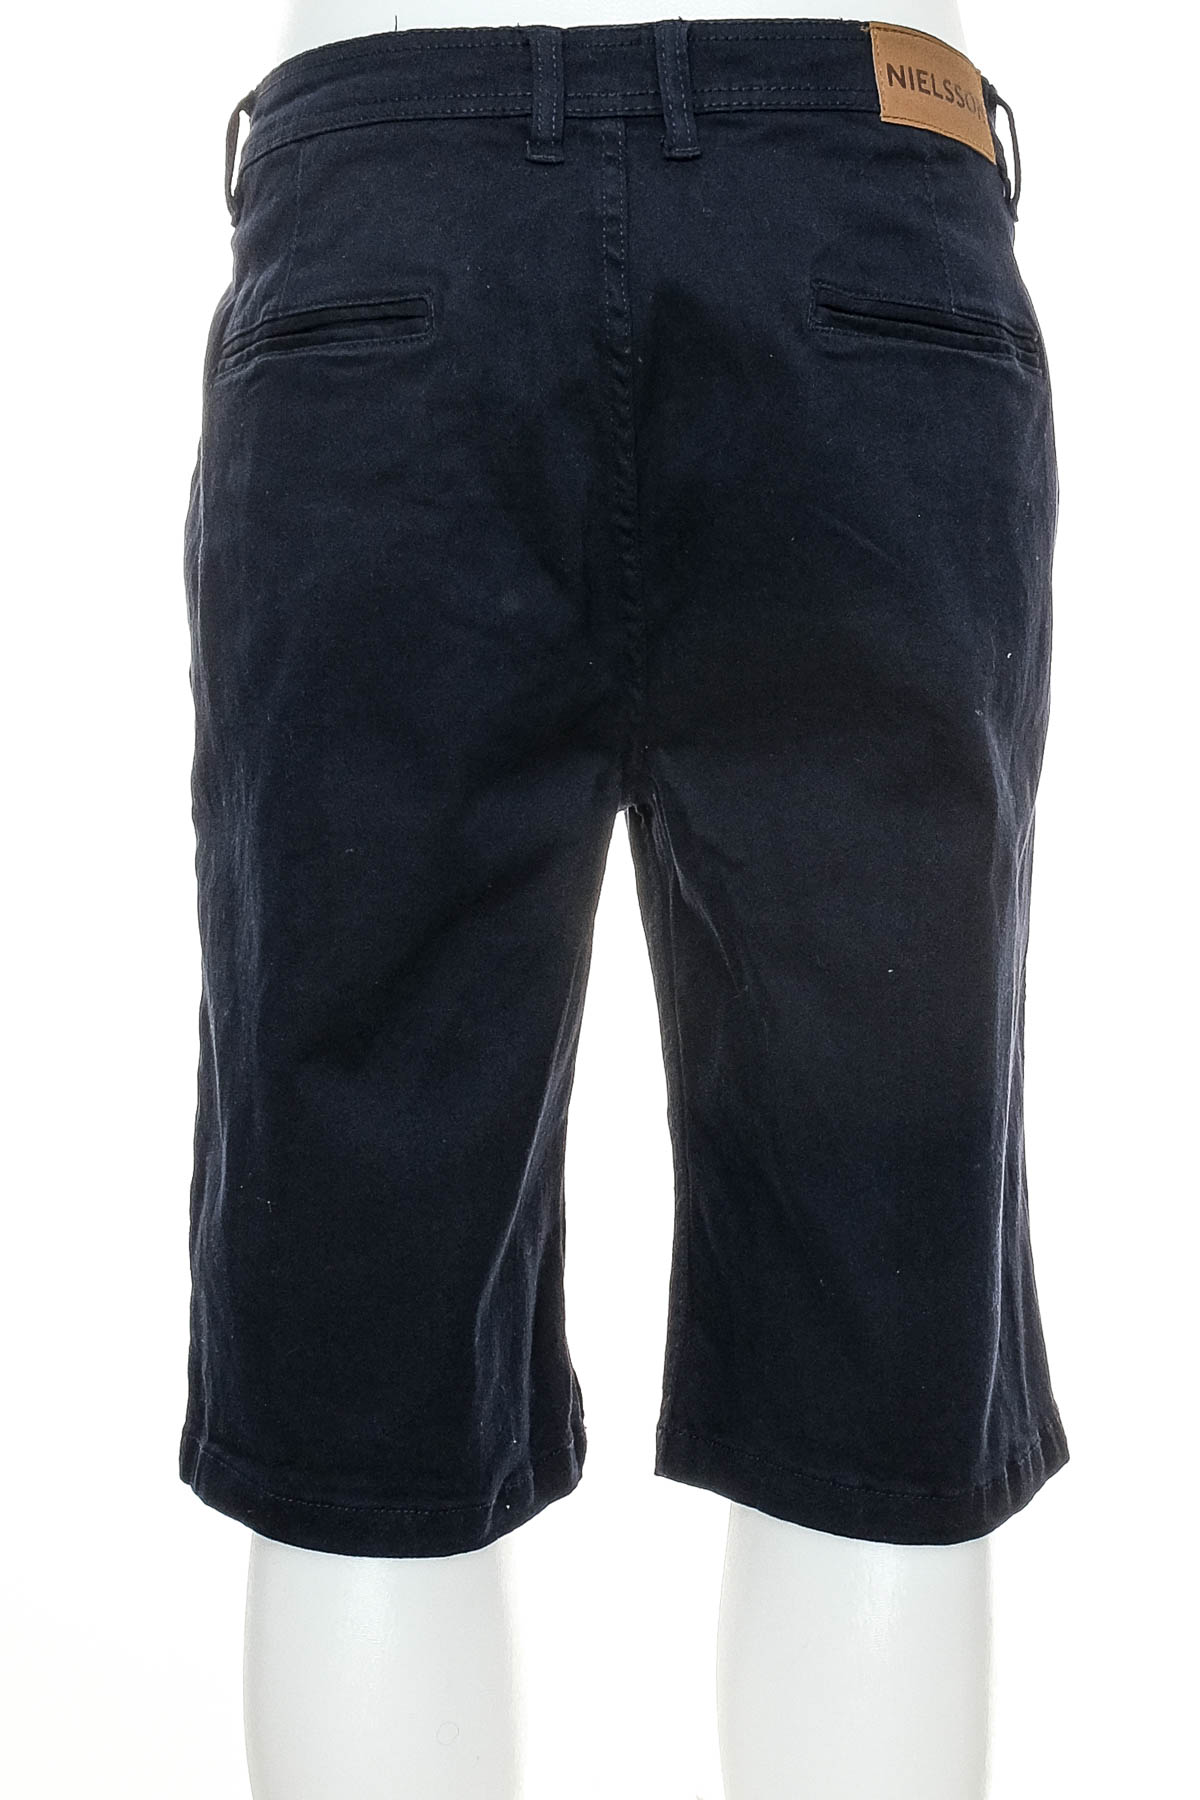 Men's shorts - Nielsson - 1